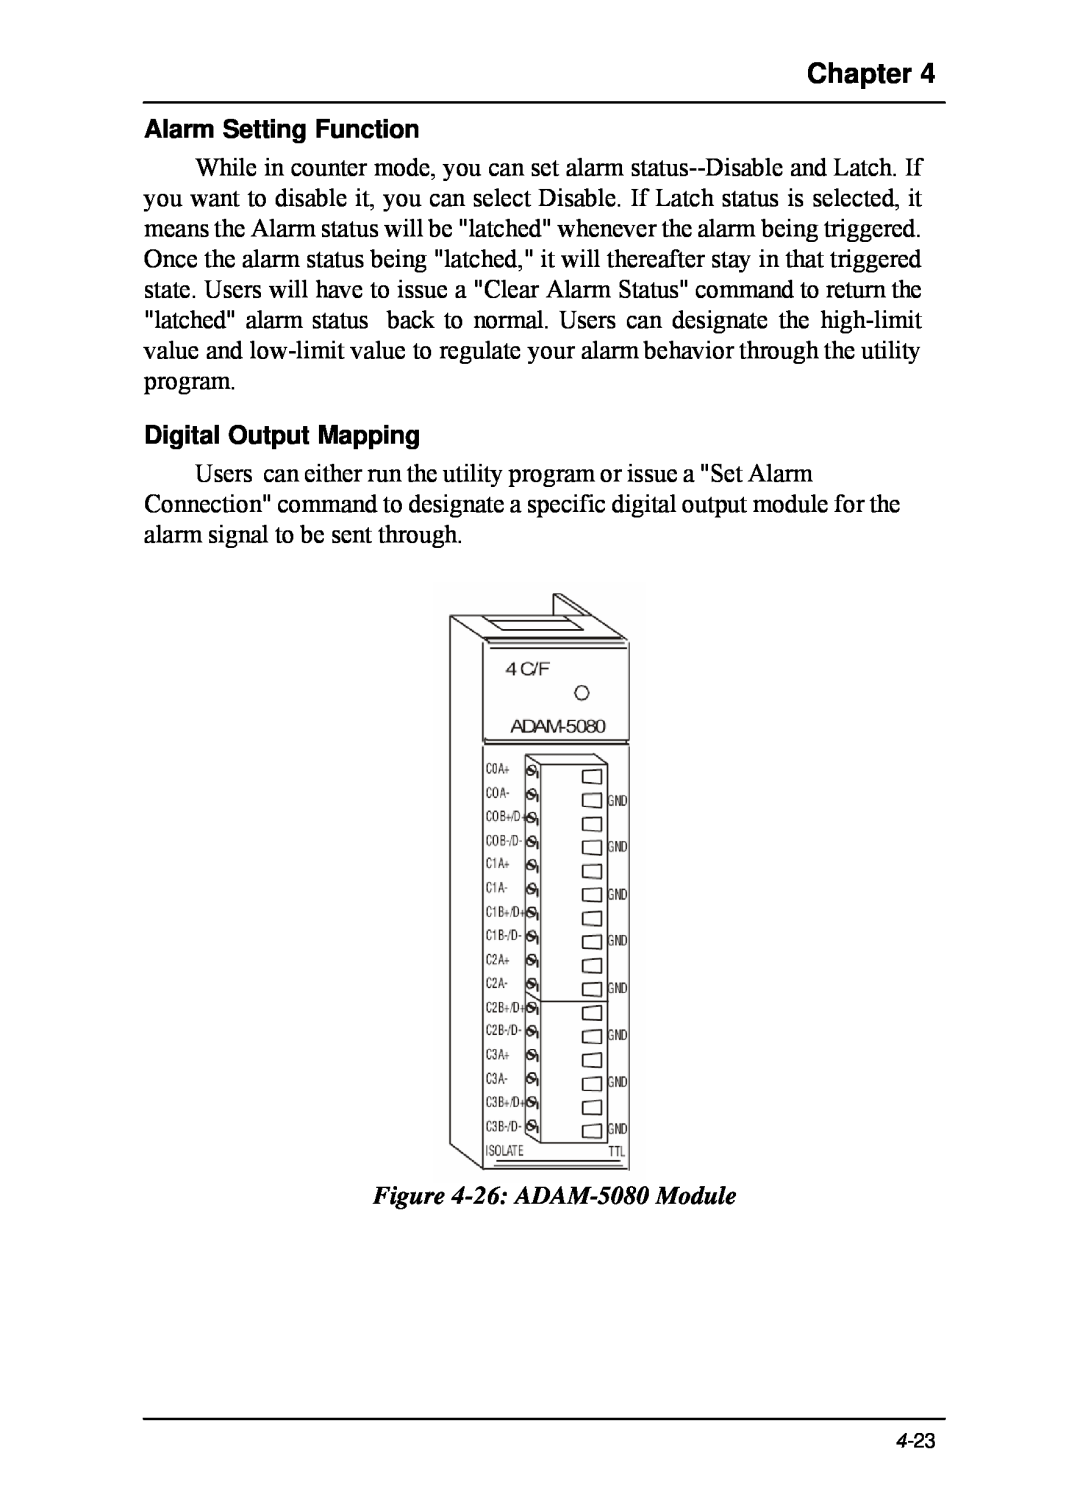 B&B Electronics 5000 Series user manual Alarm Setting Function, Digital Output Mapping, 26 ADAM-5080 Module, Chapter 